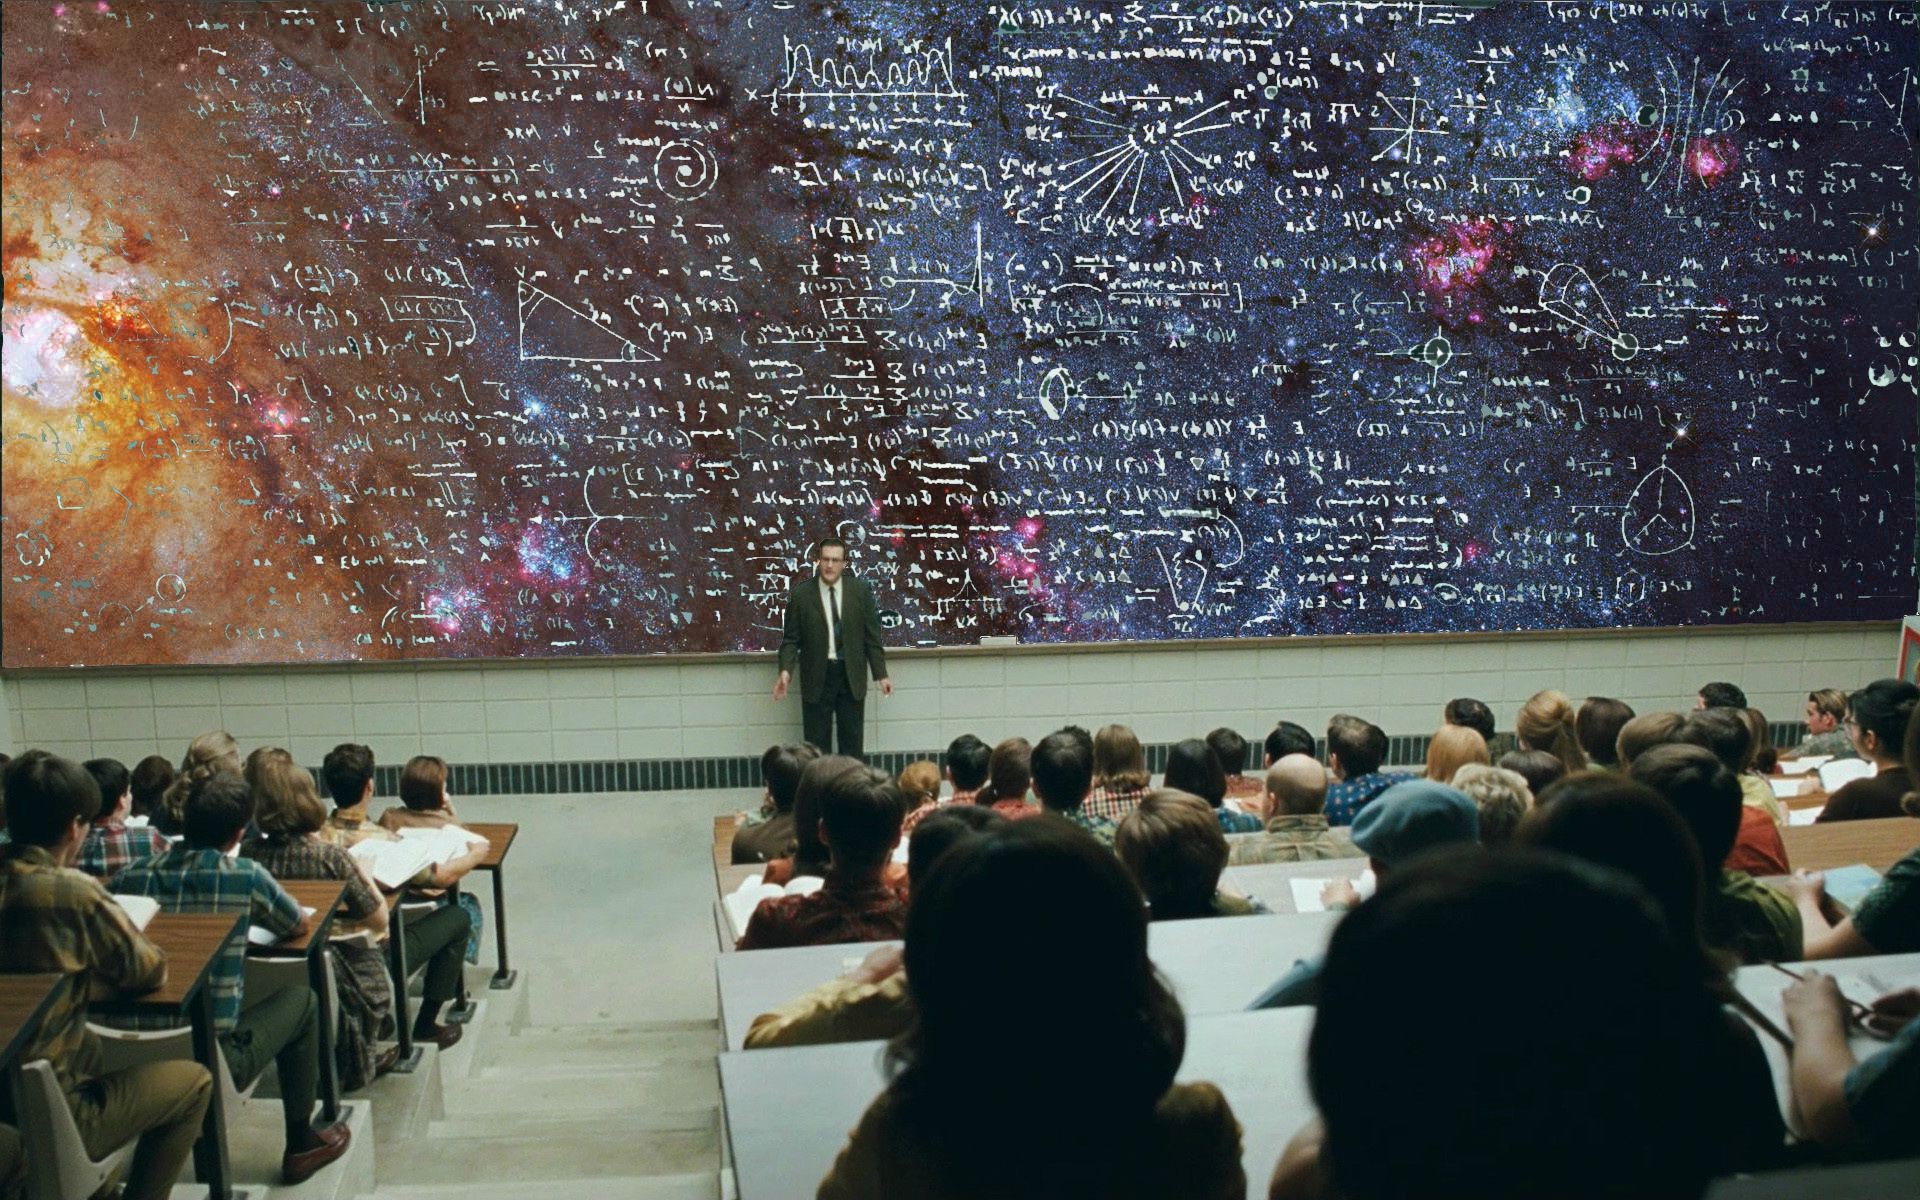 Blackboard, Space, Universities, Universe, Science, A Serious Man, Chalkboard, Nebula